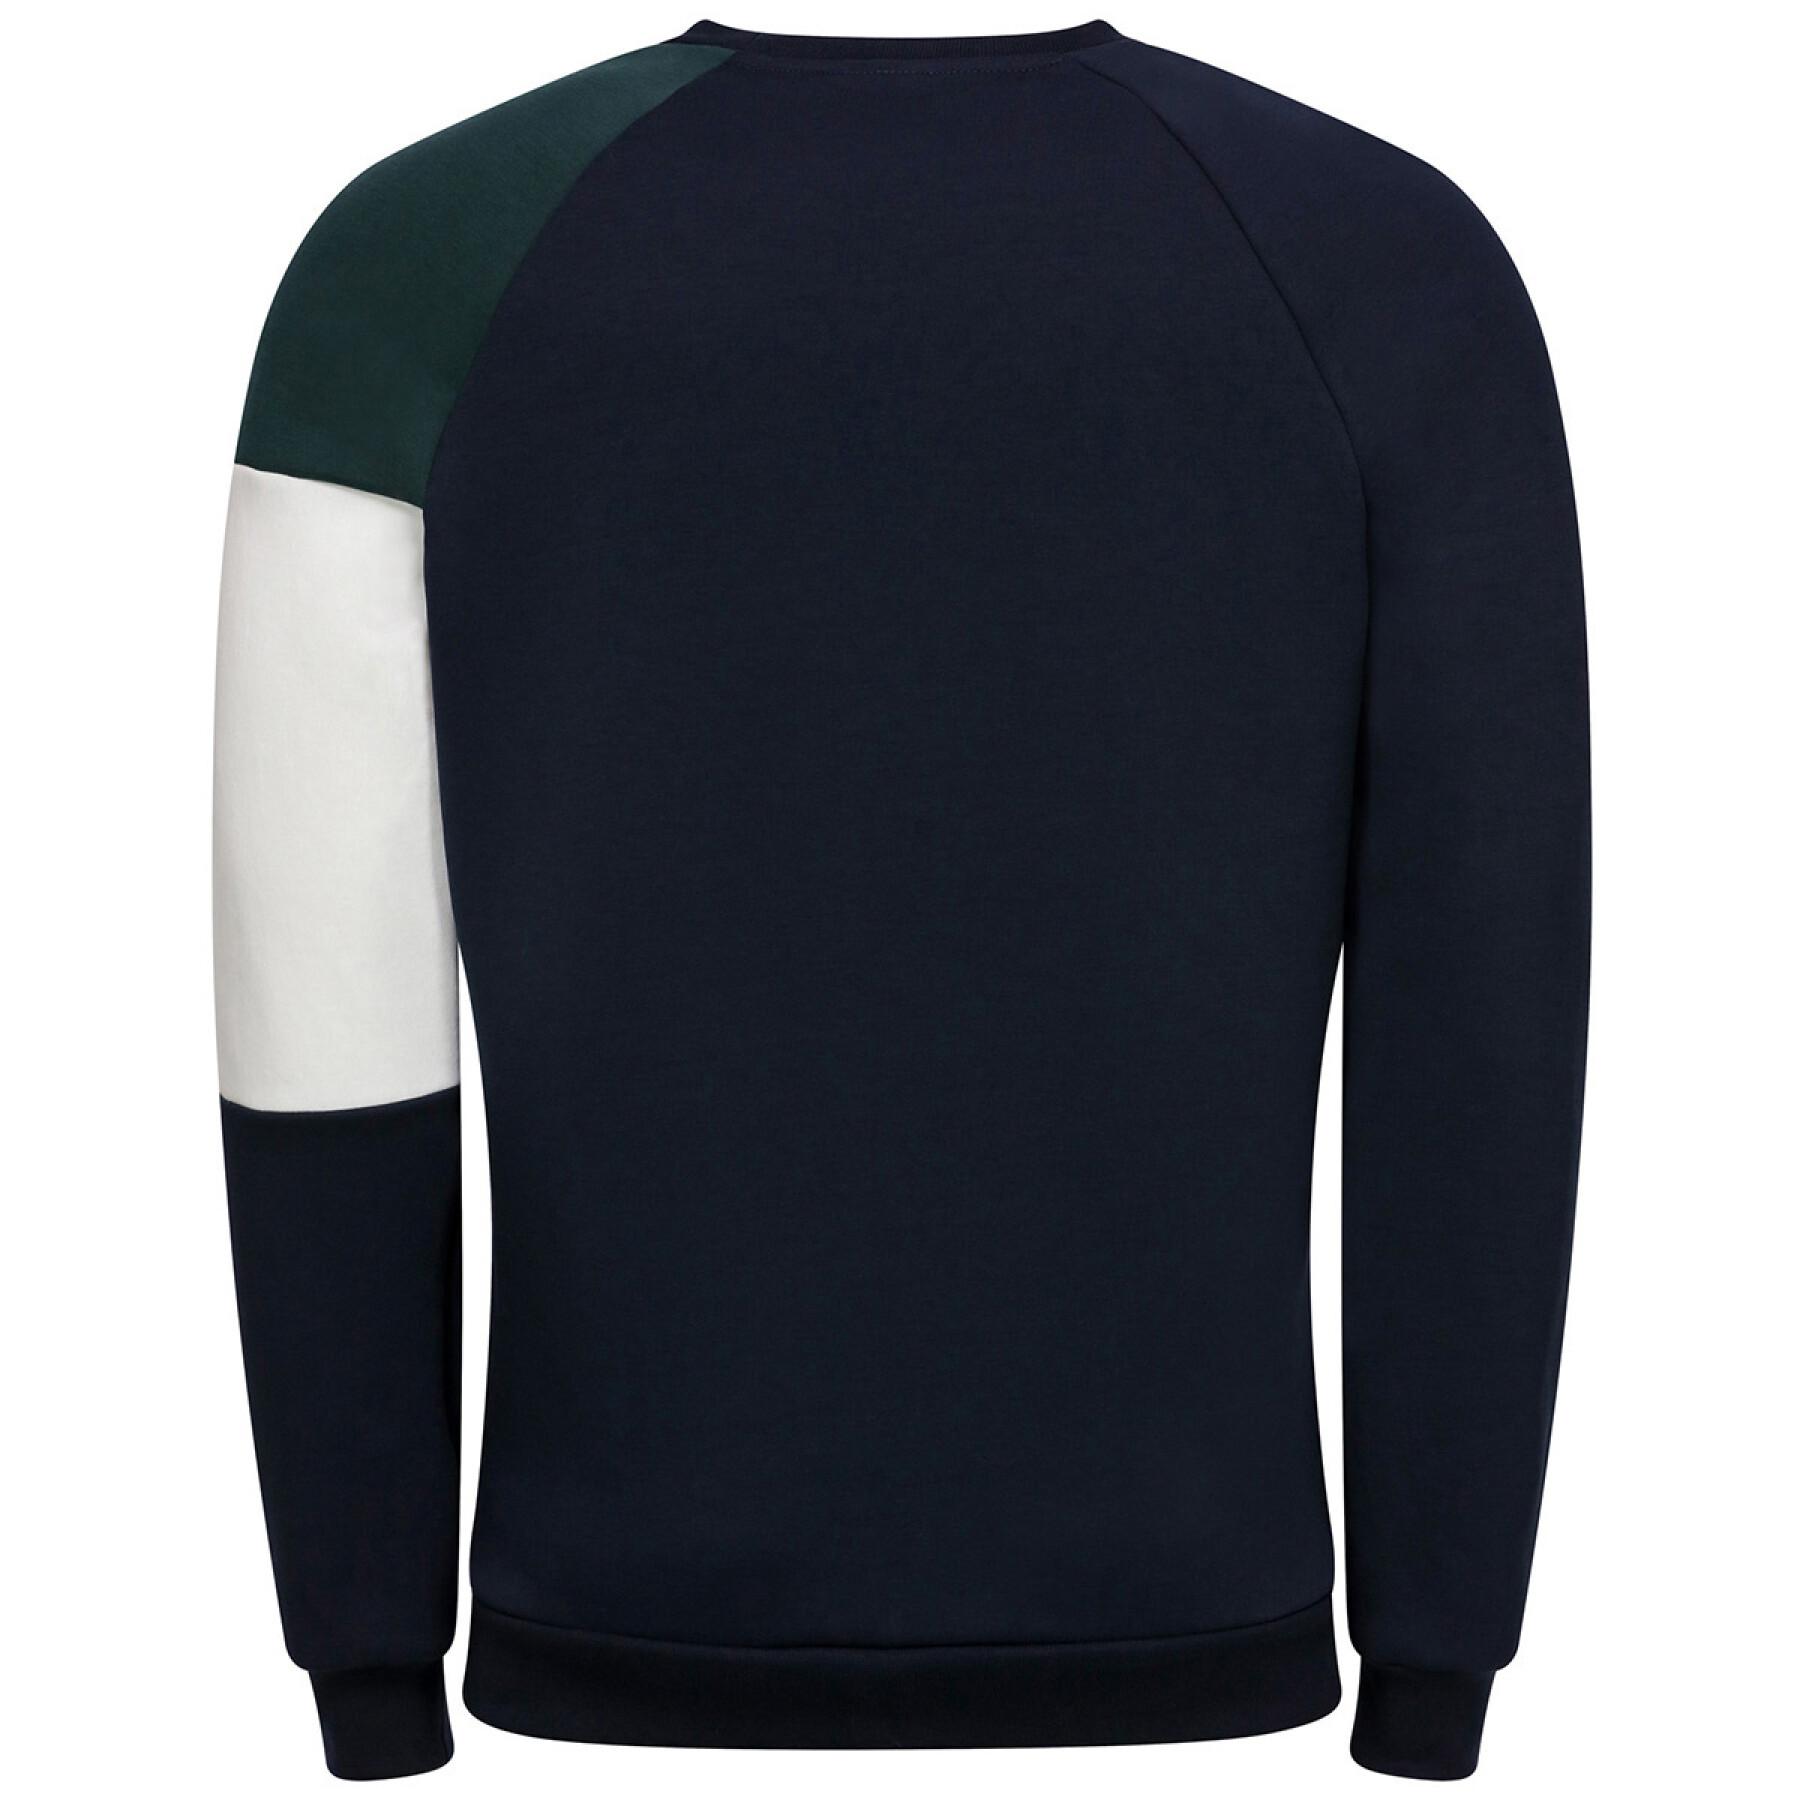 Sweatshirt Le Coq Sportif Tricolore N°2